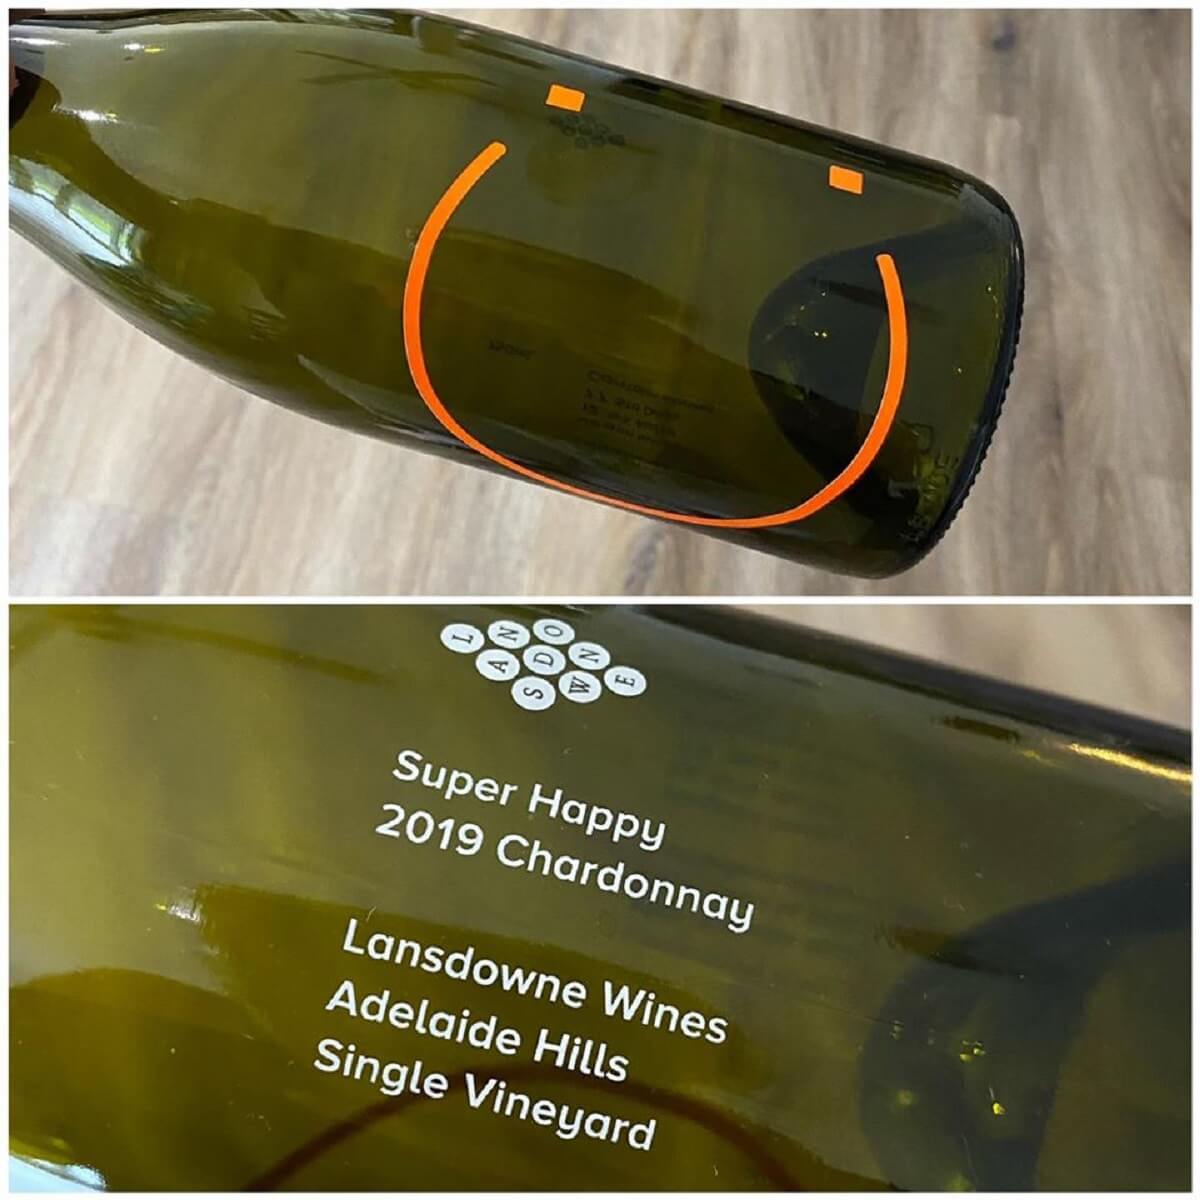 Lansdowne Wines ‘Super Happy’ 2019 Chardonnay